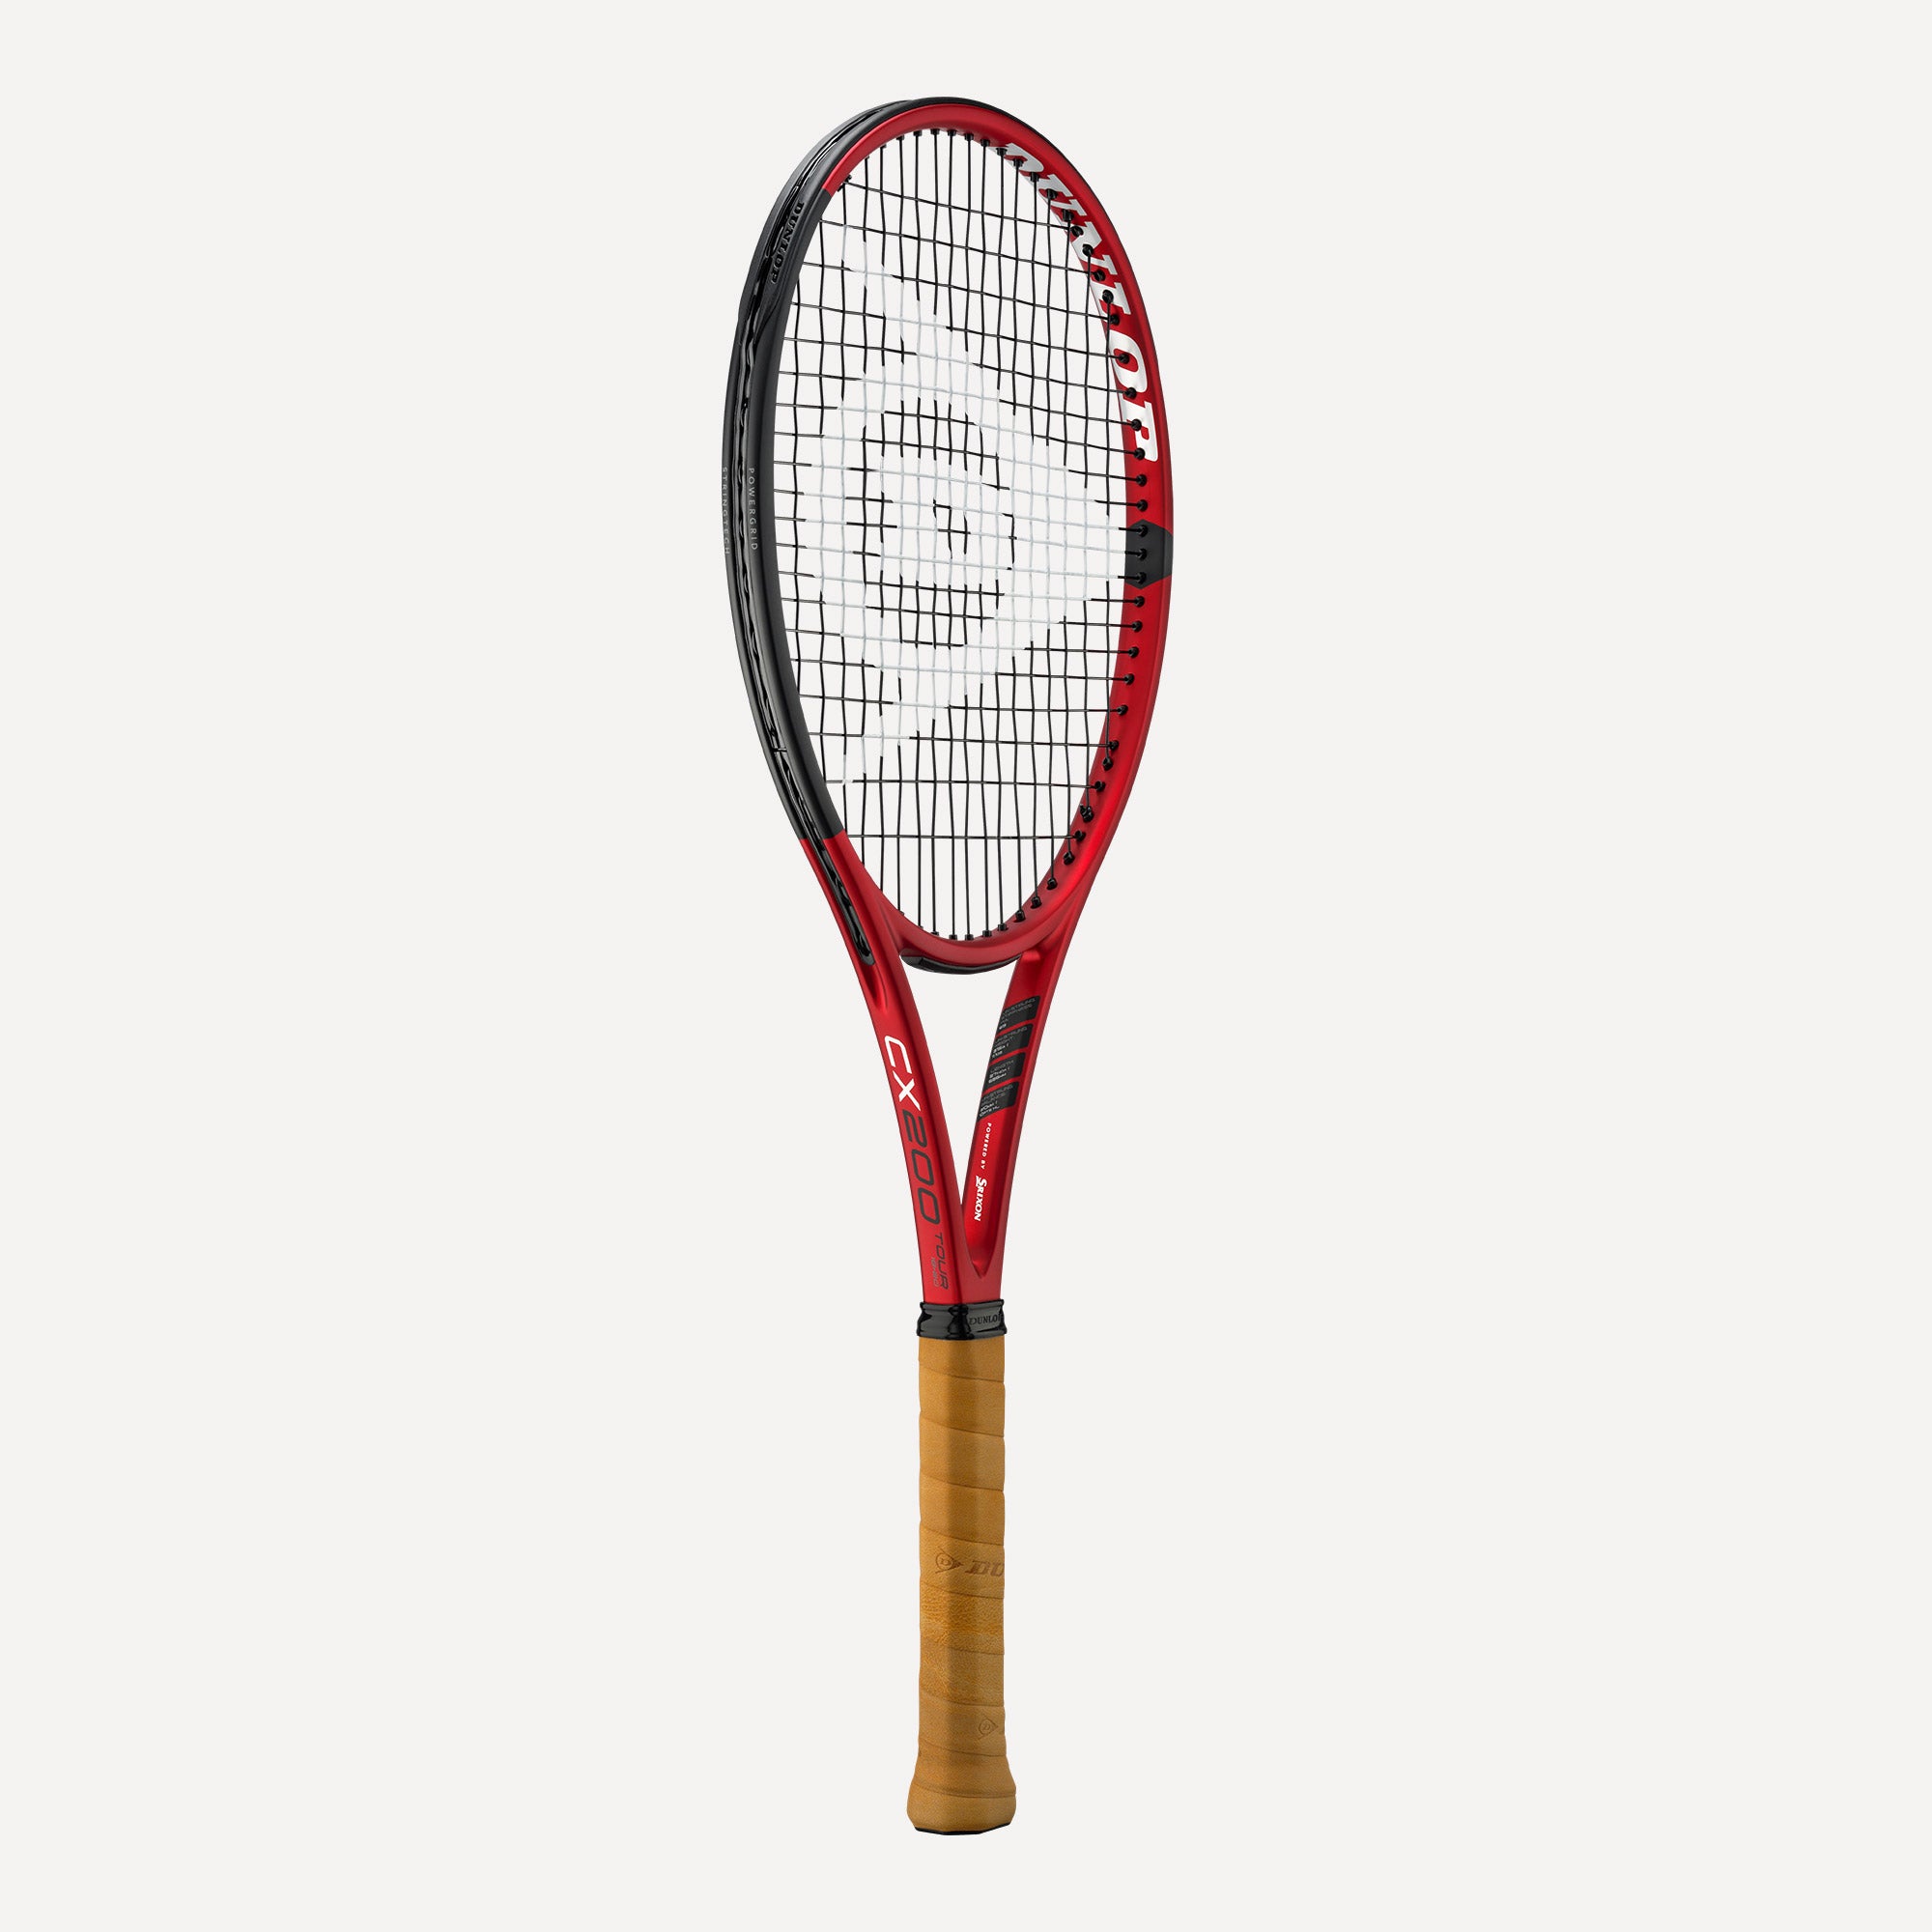 Dunlop Tennis Equipment - Rackets, Bags, Strings & Accessories 